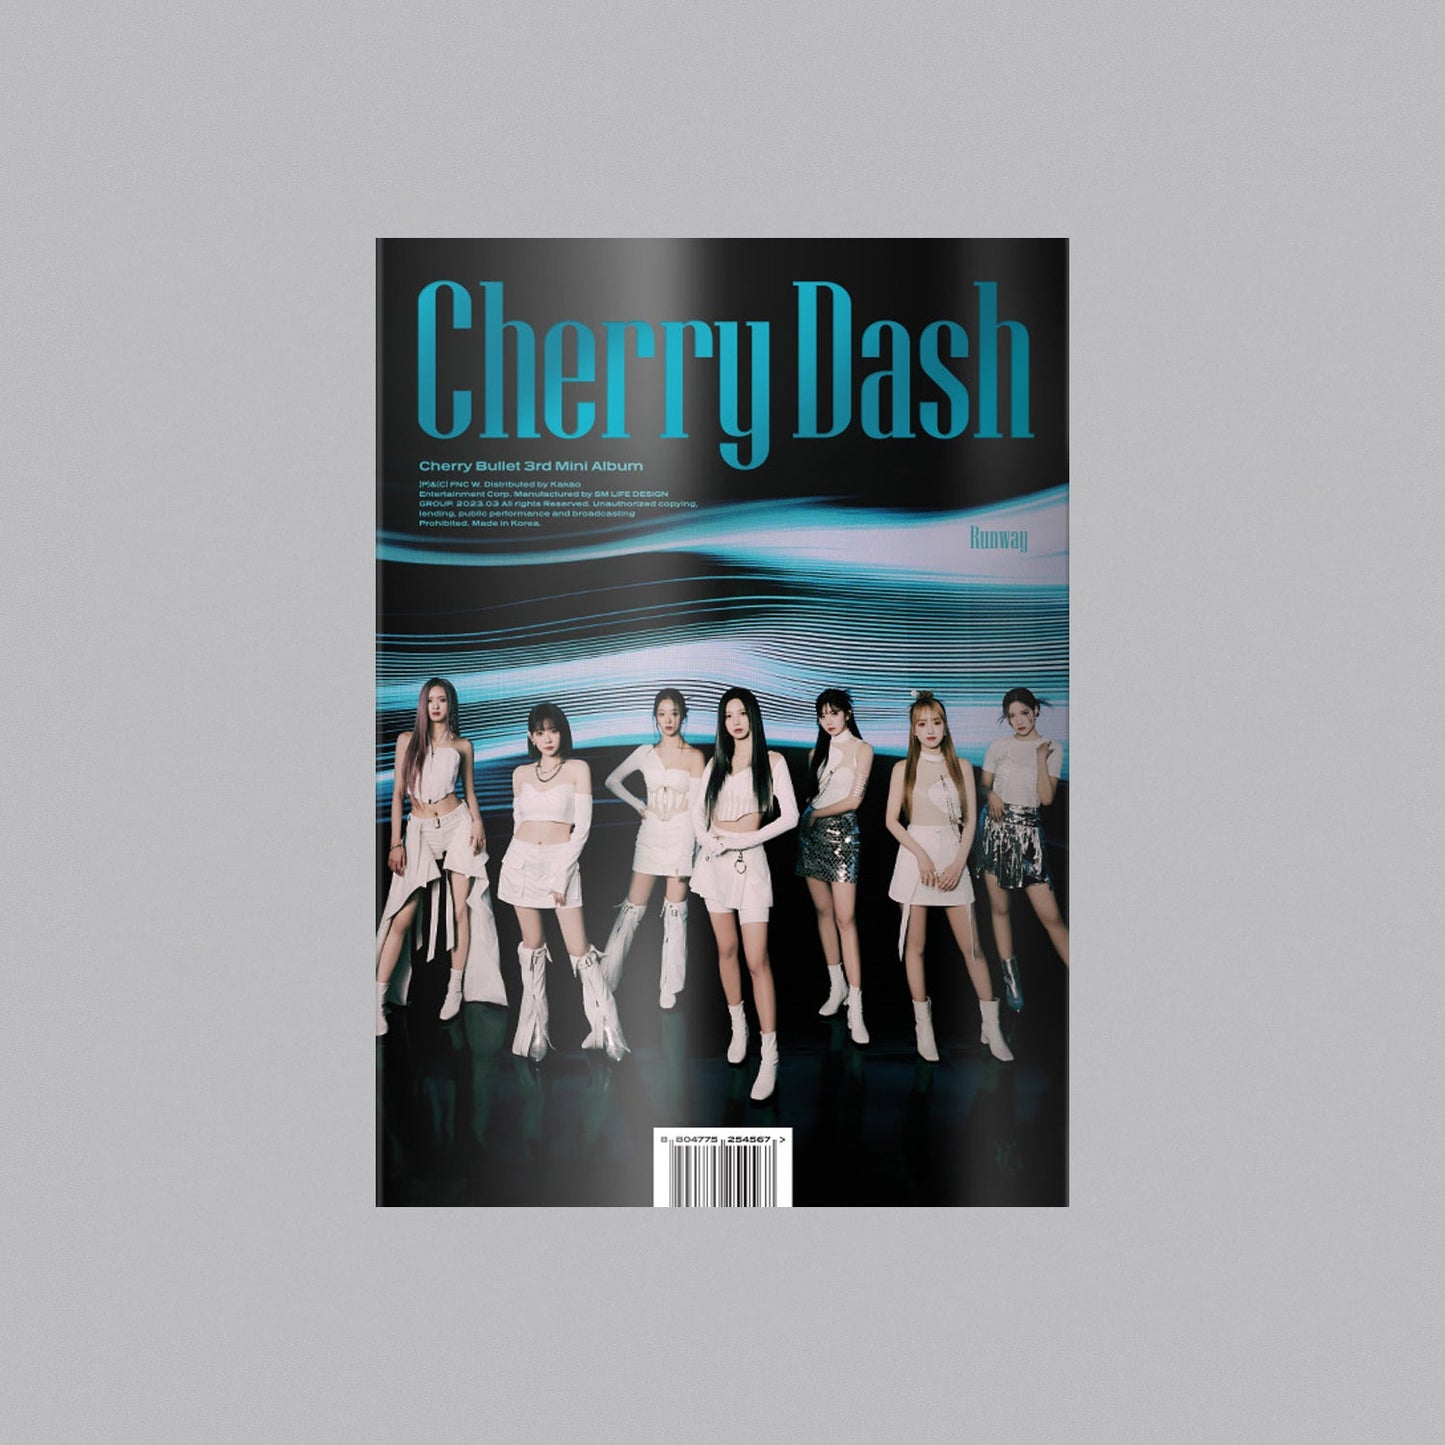 CHERRY BULLET 3RD MINI ALBUM 'CHERRY DASH' RUNWAY VERSION COVER